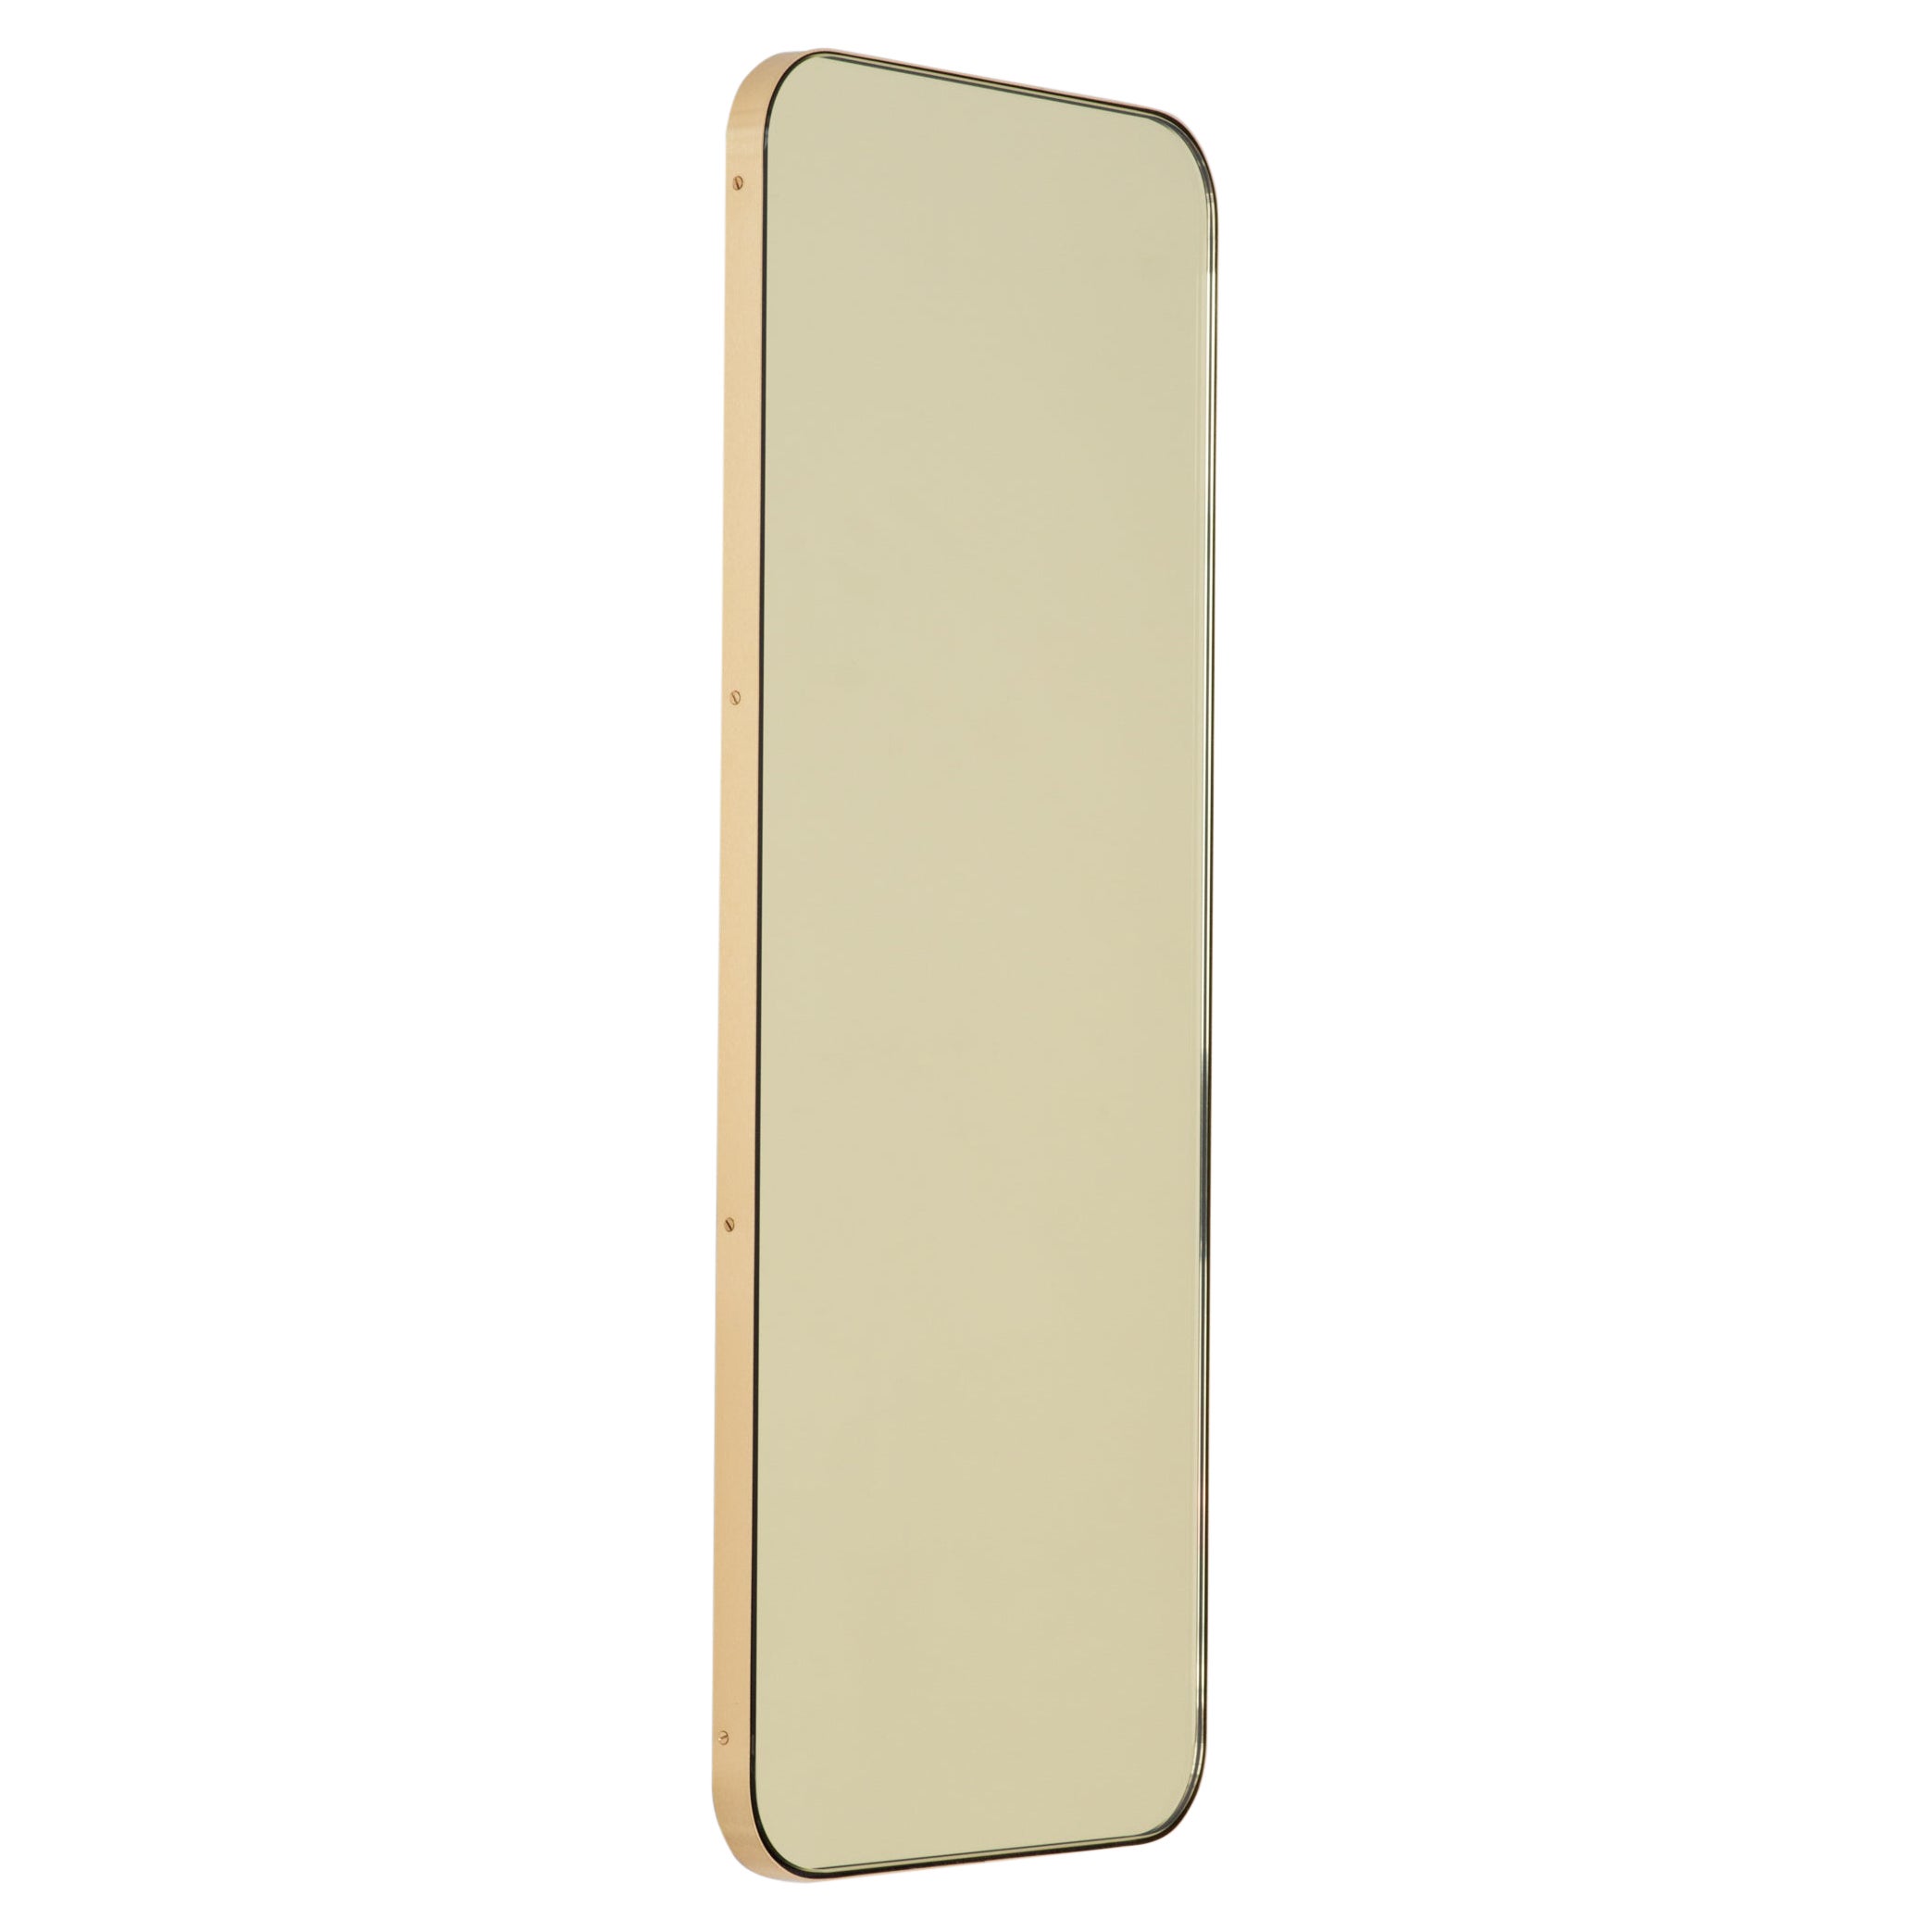 Quadris Gold Tinted Contemporary Rectangular Mirror with Brass Frame, XL